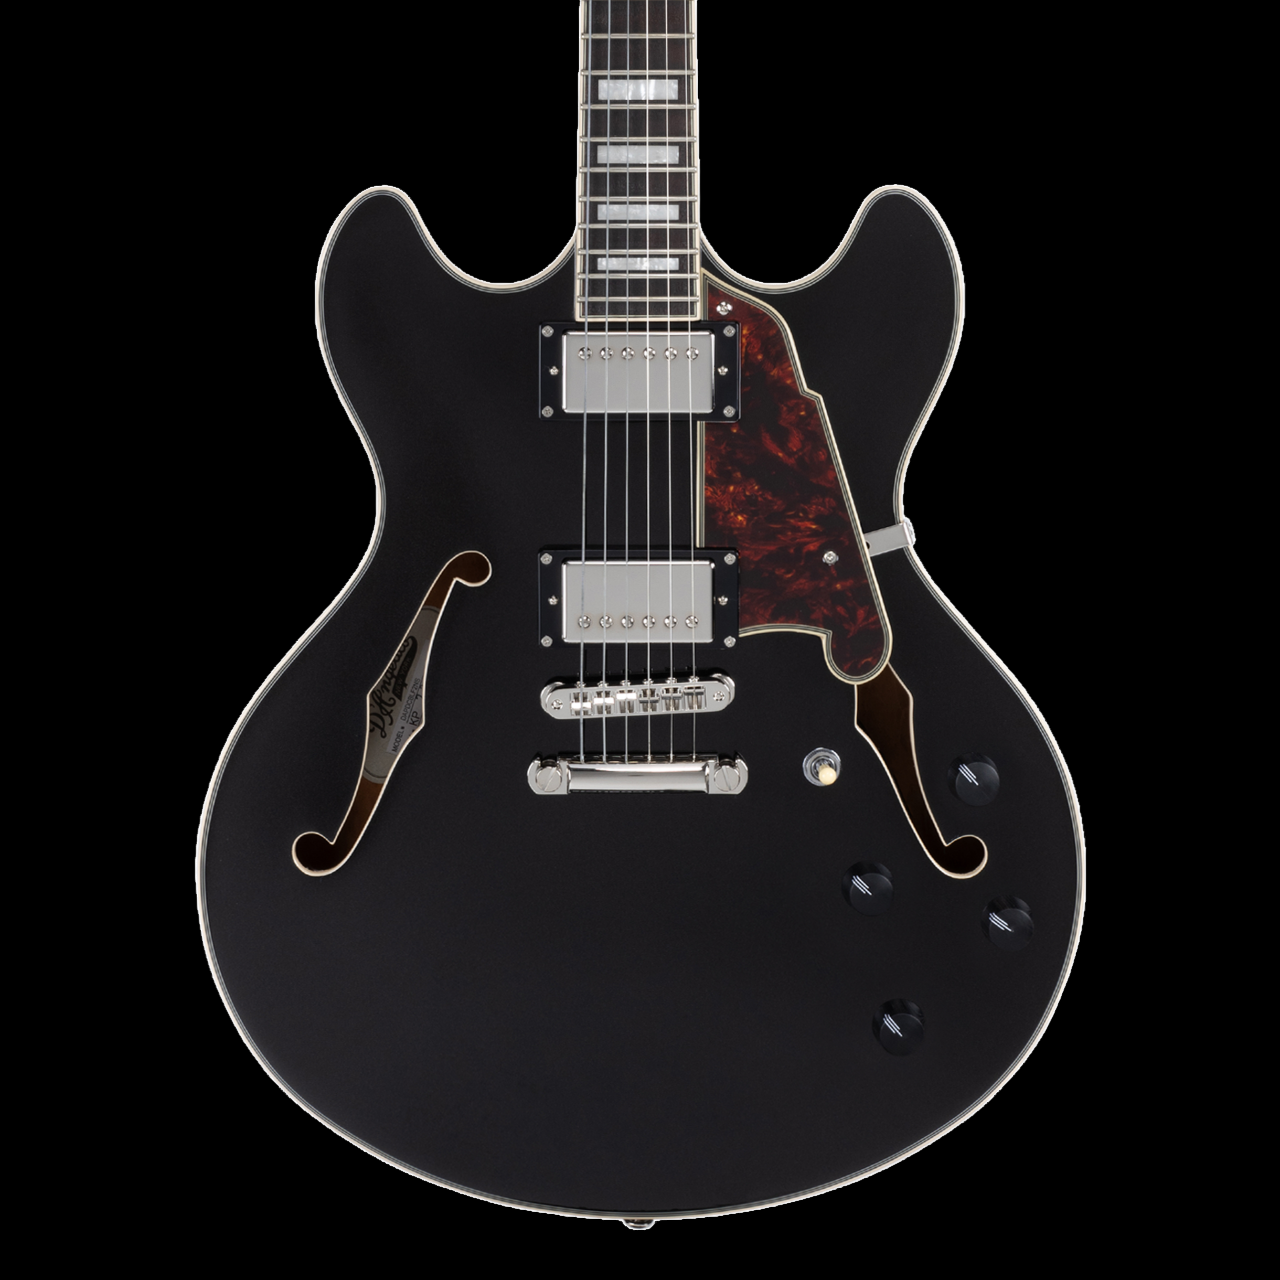 D'Angelico Premier DC Black Flake Electric Guitar